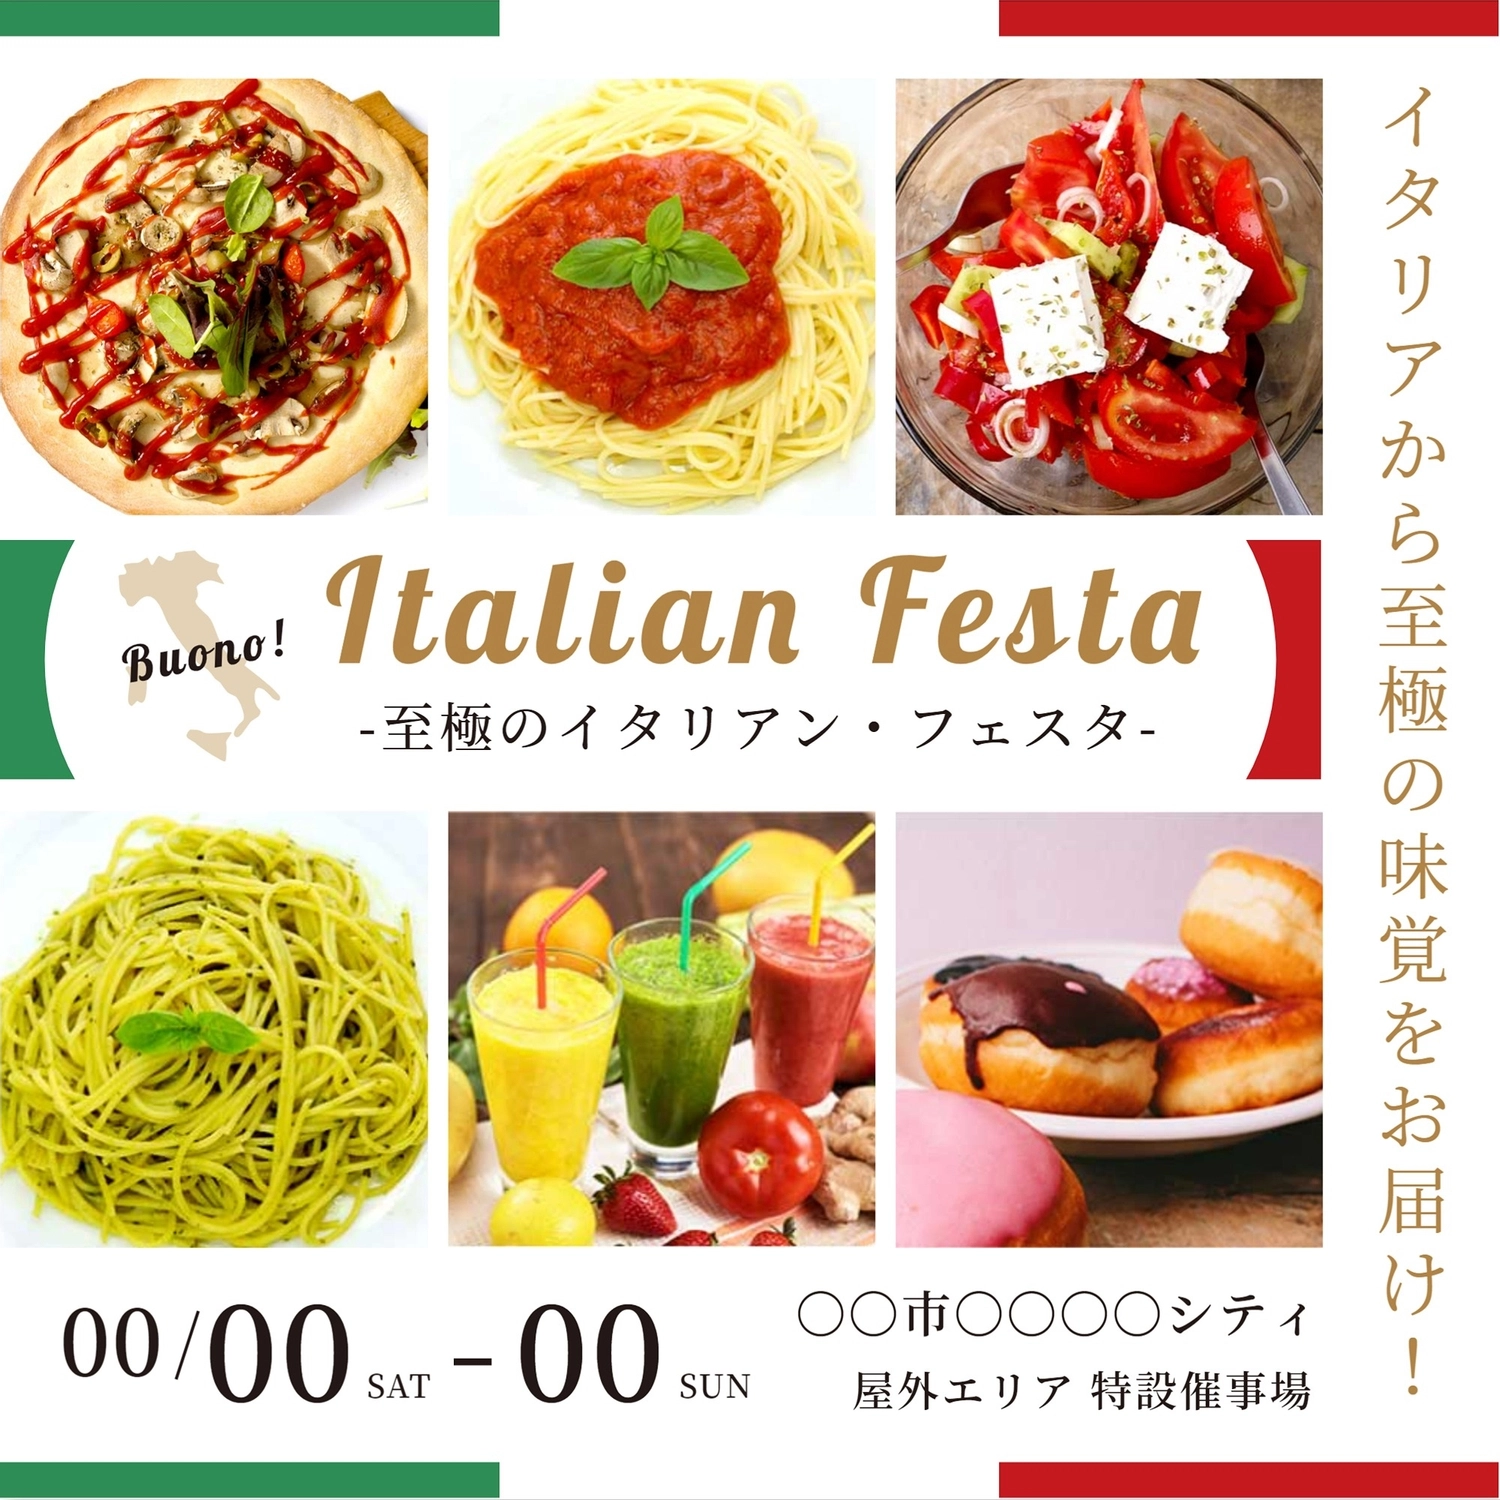 イタリアフェスのテンプレート, Xà lách cà chua, chế độ ăn, Thời gian giới hạn, Instagram Post mẫu